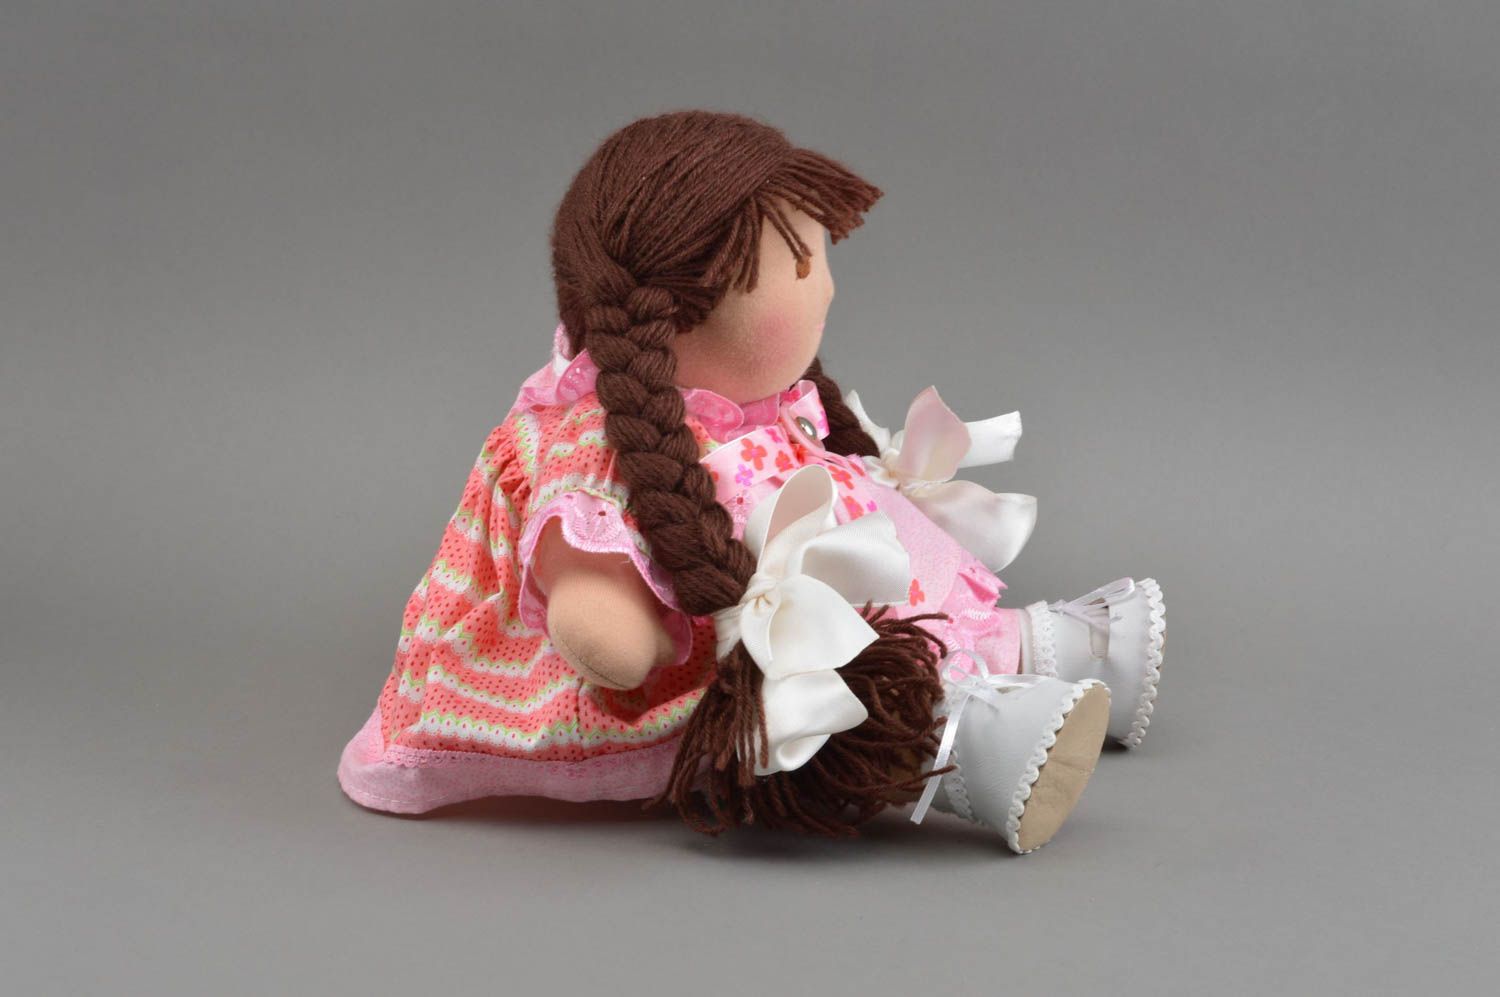 Muñeca artesanal hecha a mano de tela regalos para niñas decoración de hogar foto 5